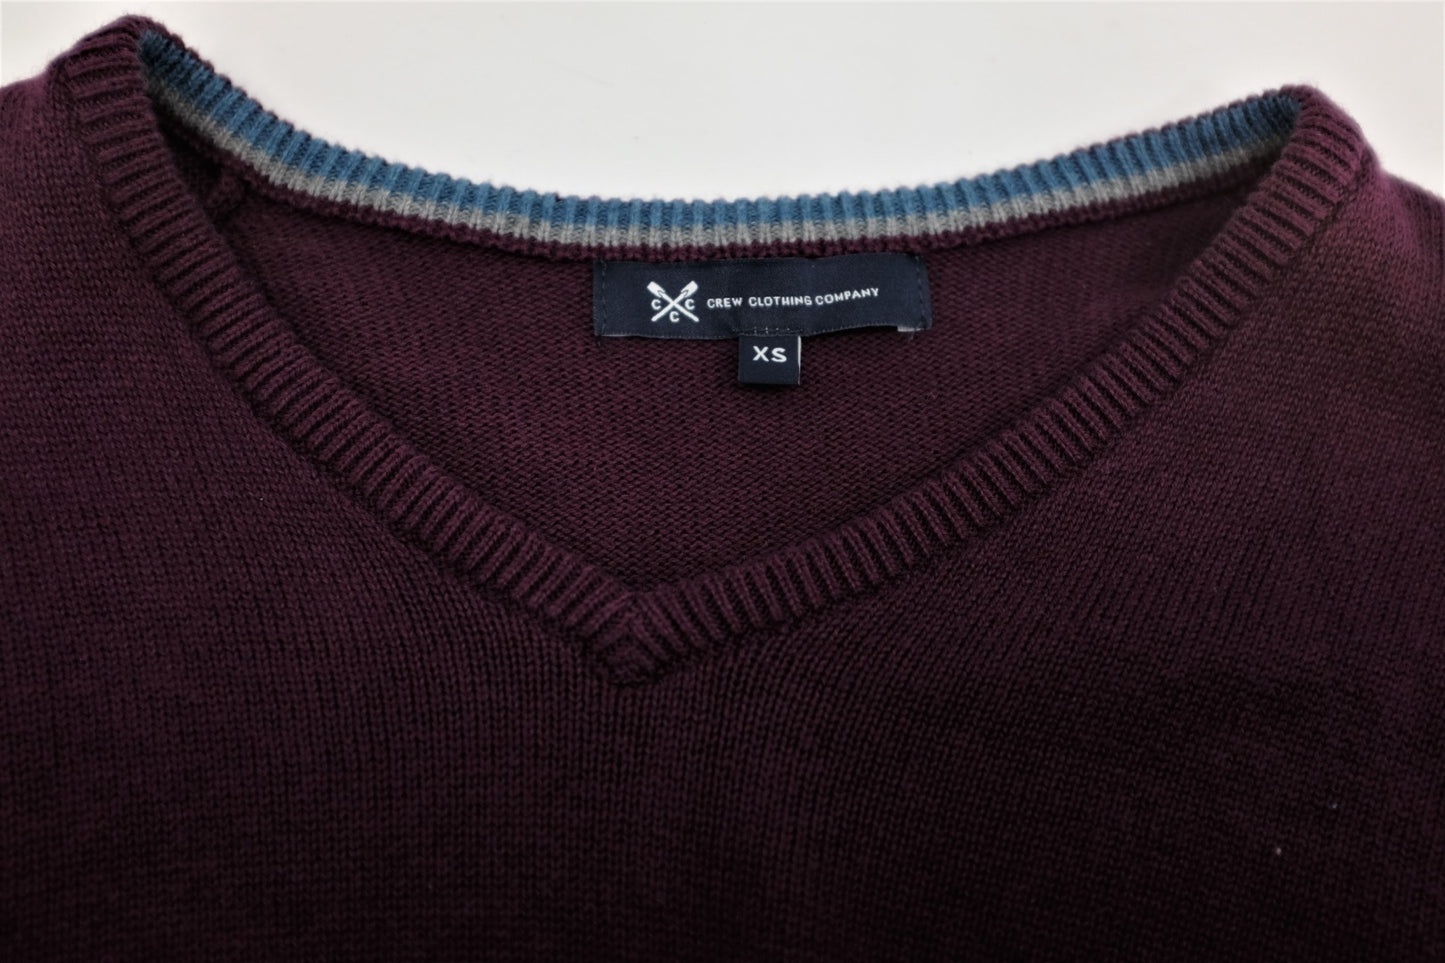 Crew Clothing Co. Purple Knit Men Jumper - Size XS